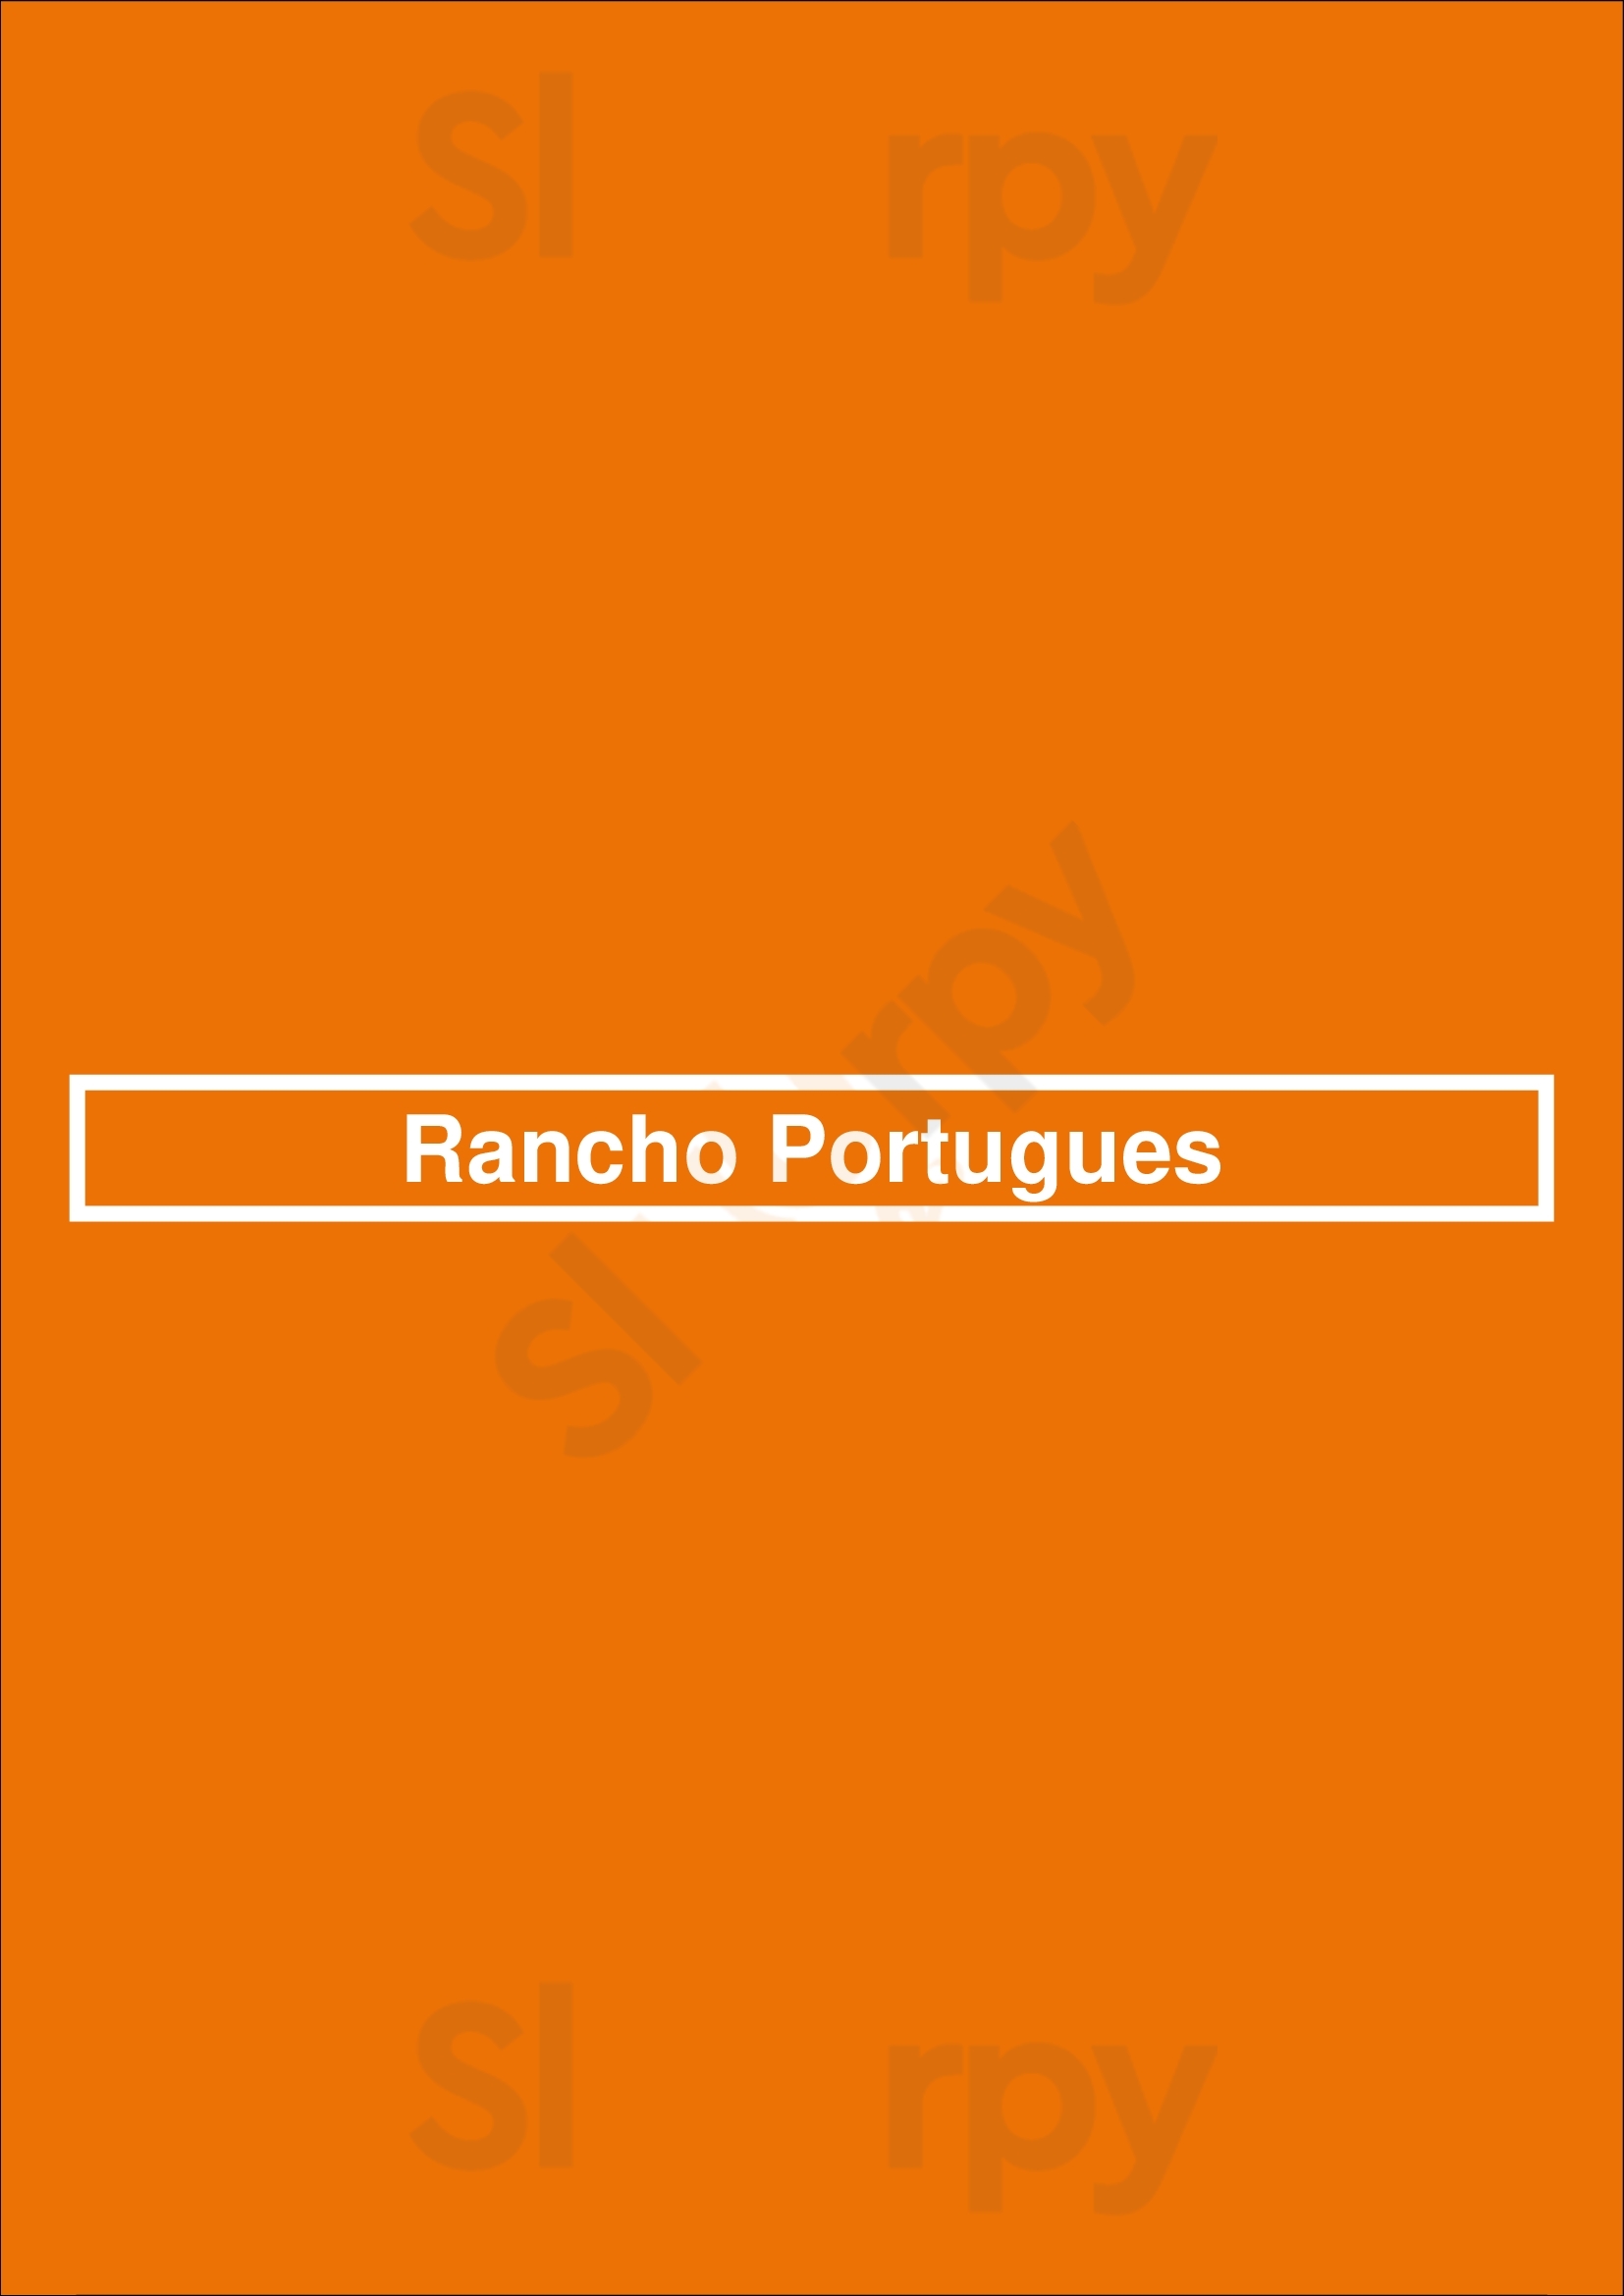 Rancho Portugues Rio de Janeiro Menu - 1